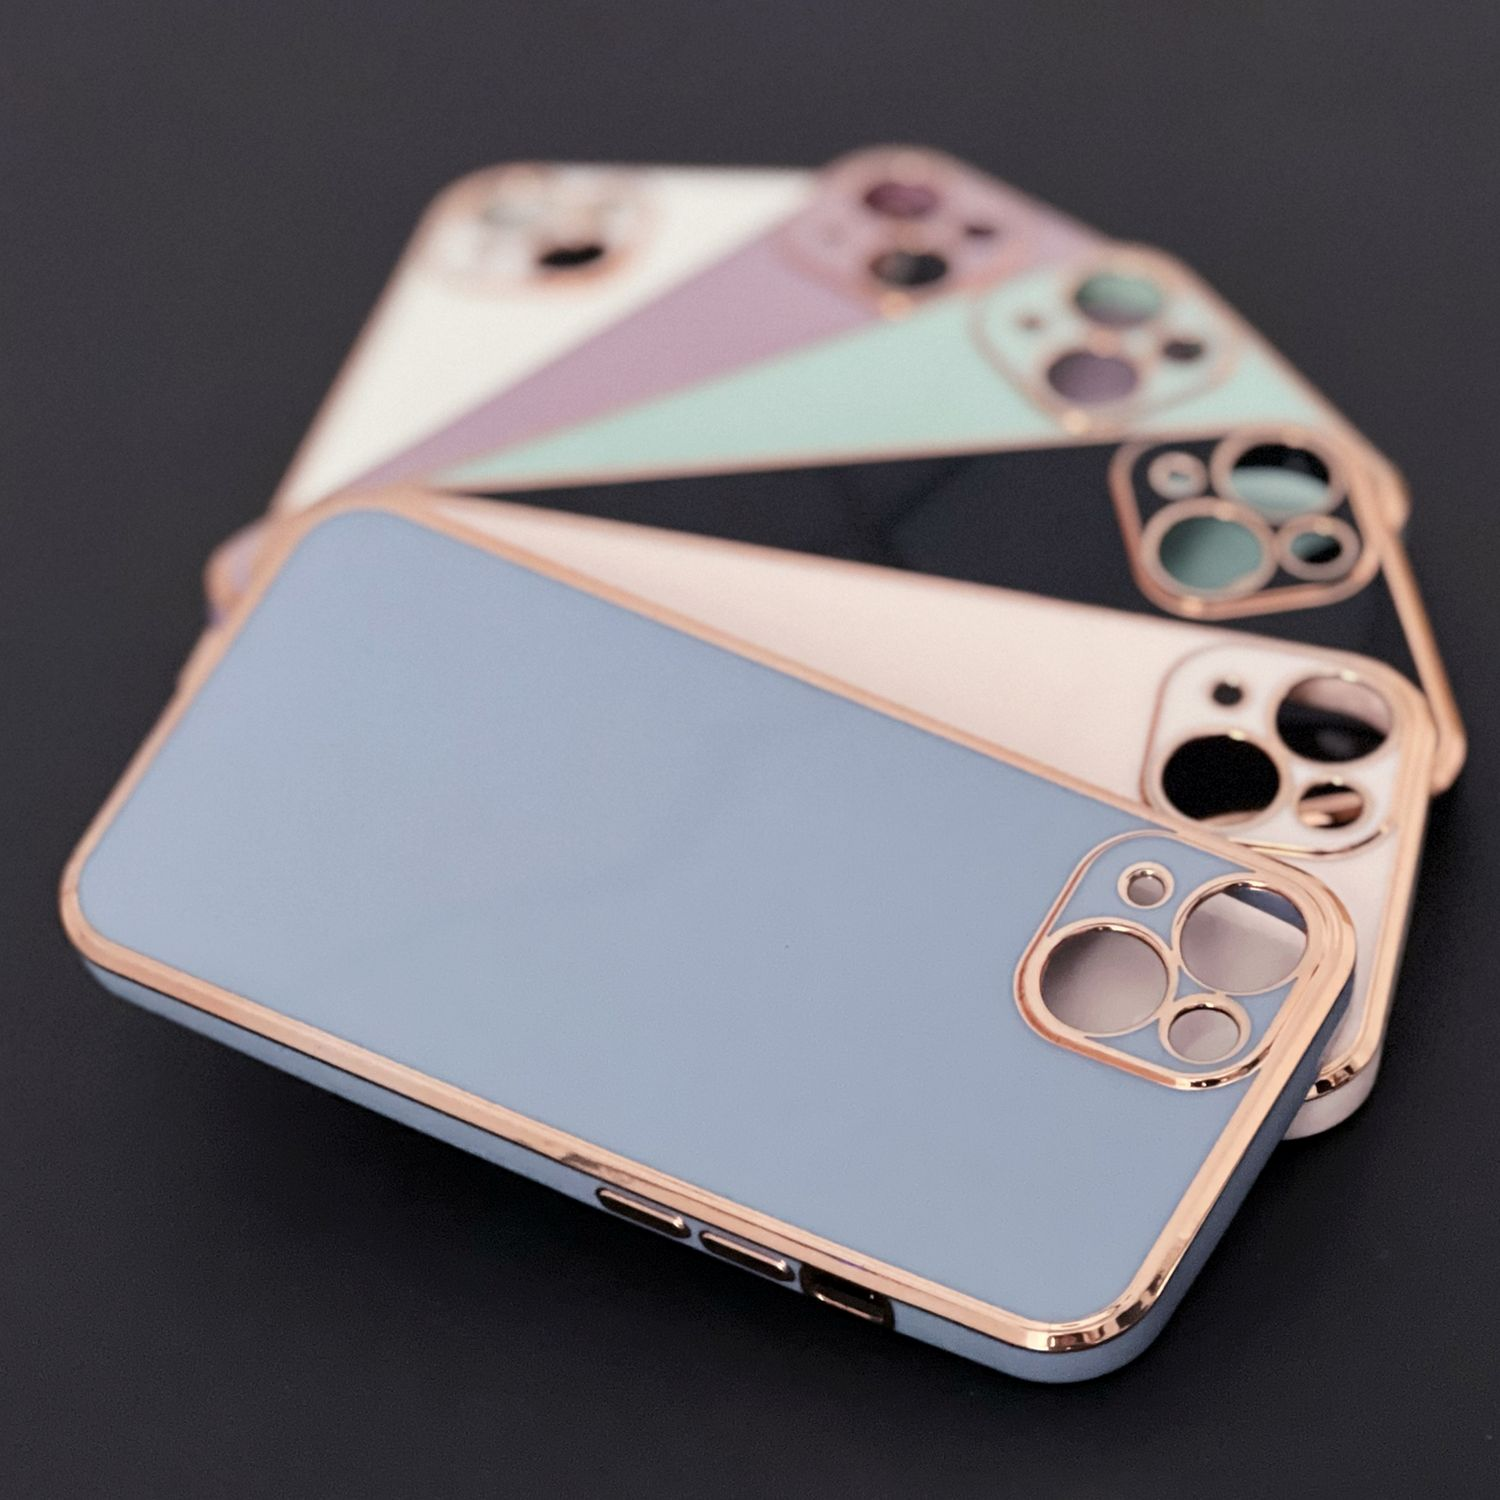 iPhone Color 13, Lighting Apple, COFI Backcover, Case, Lila-Gold